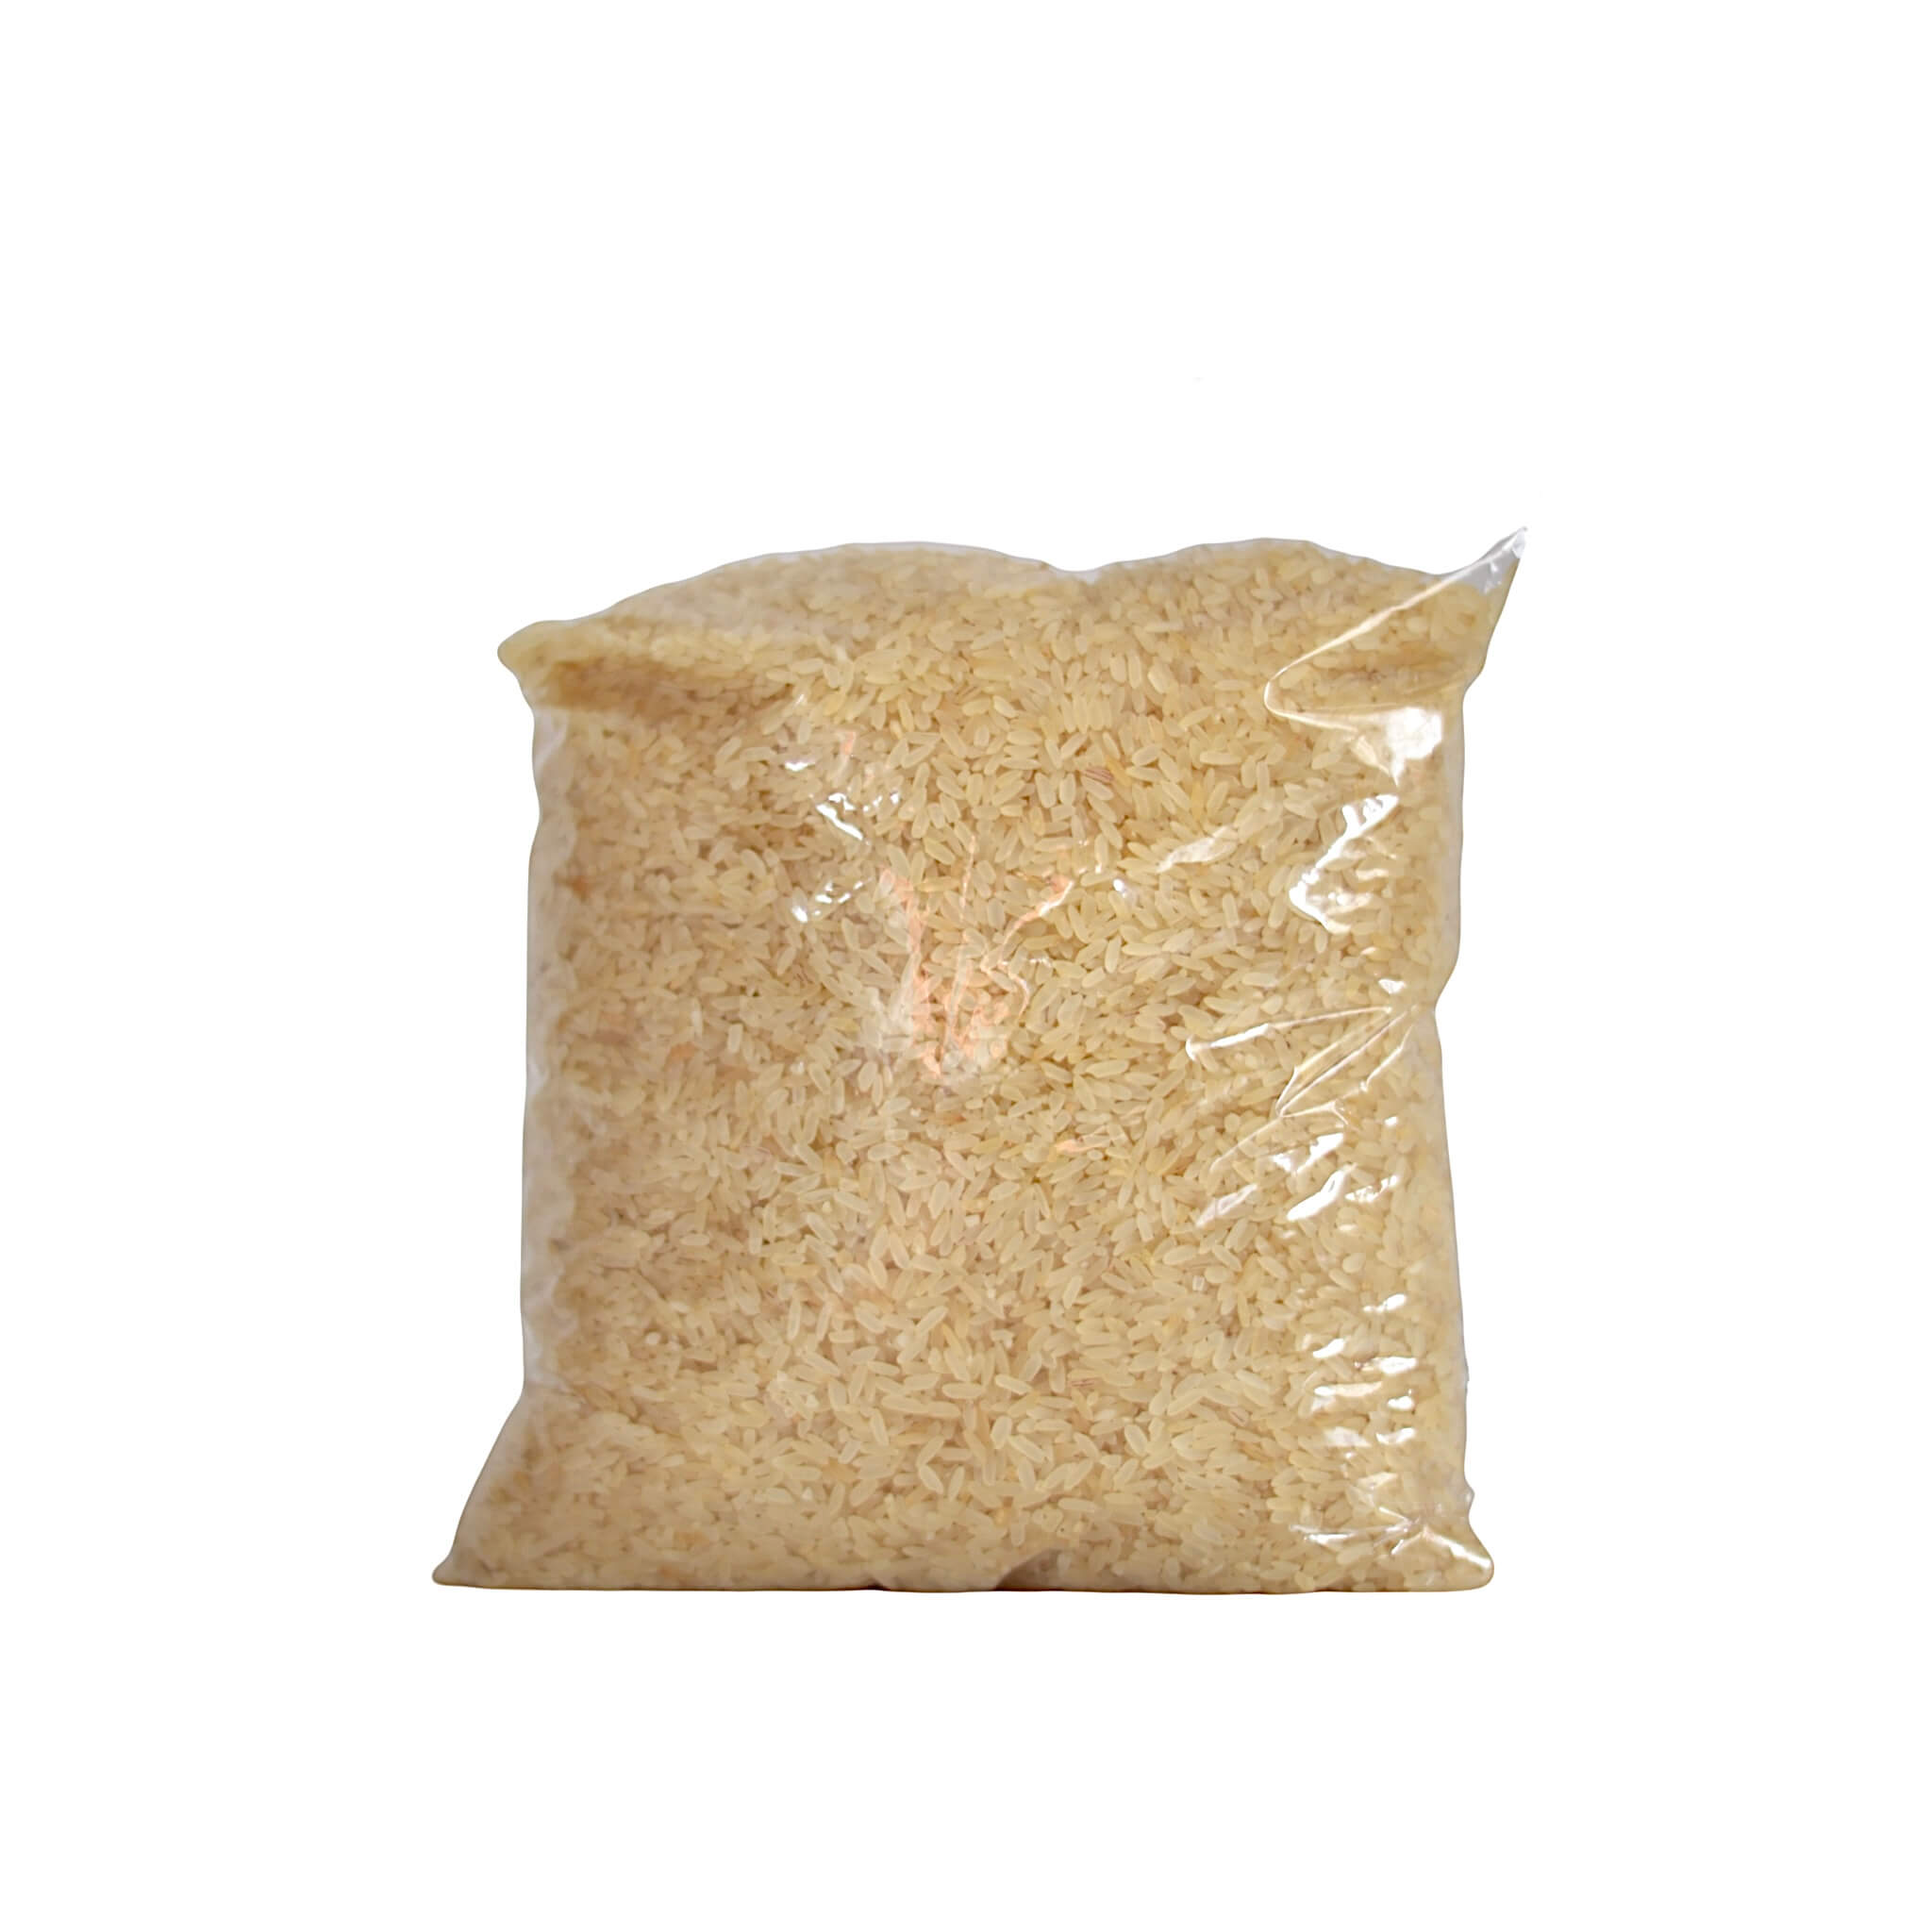 1congo of short grain rice